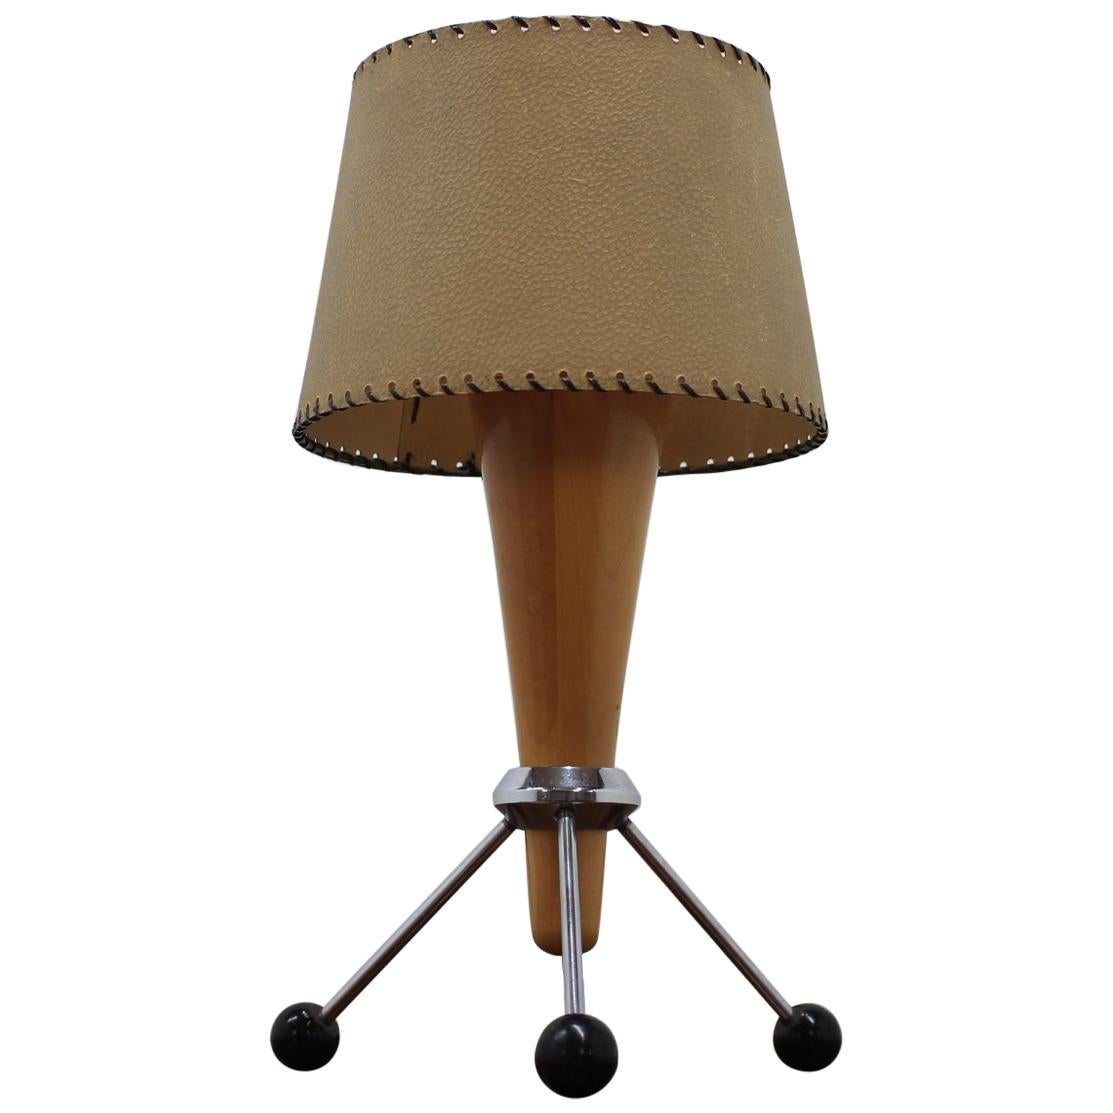 Midcentury Table Lamp "Rocket", 1960s